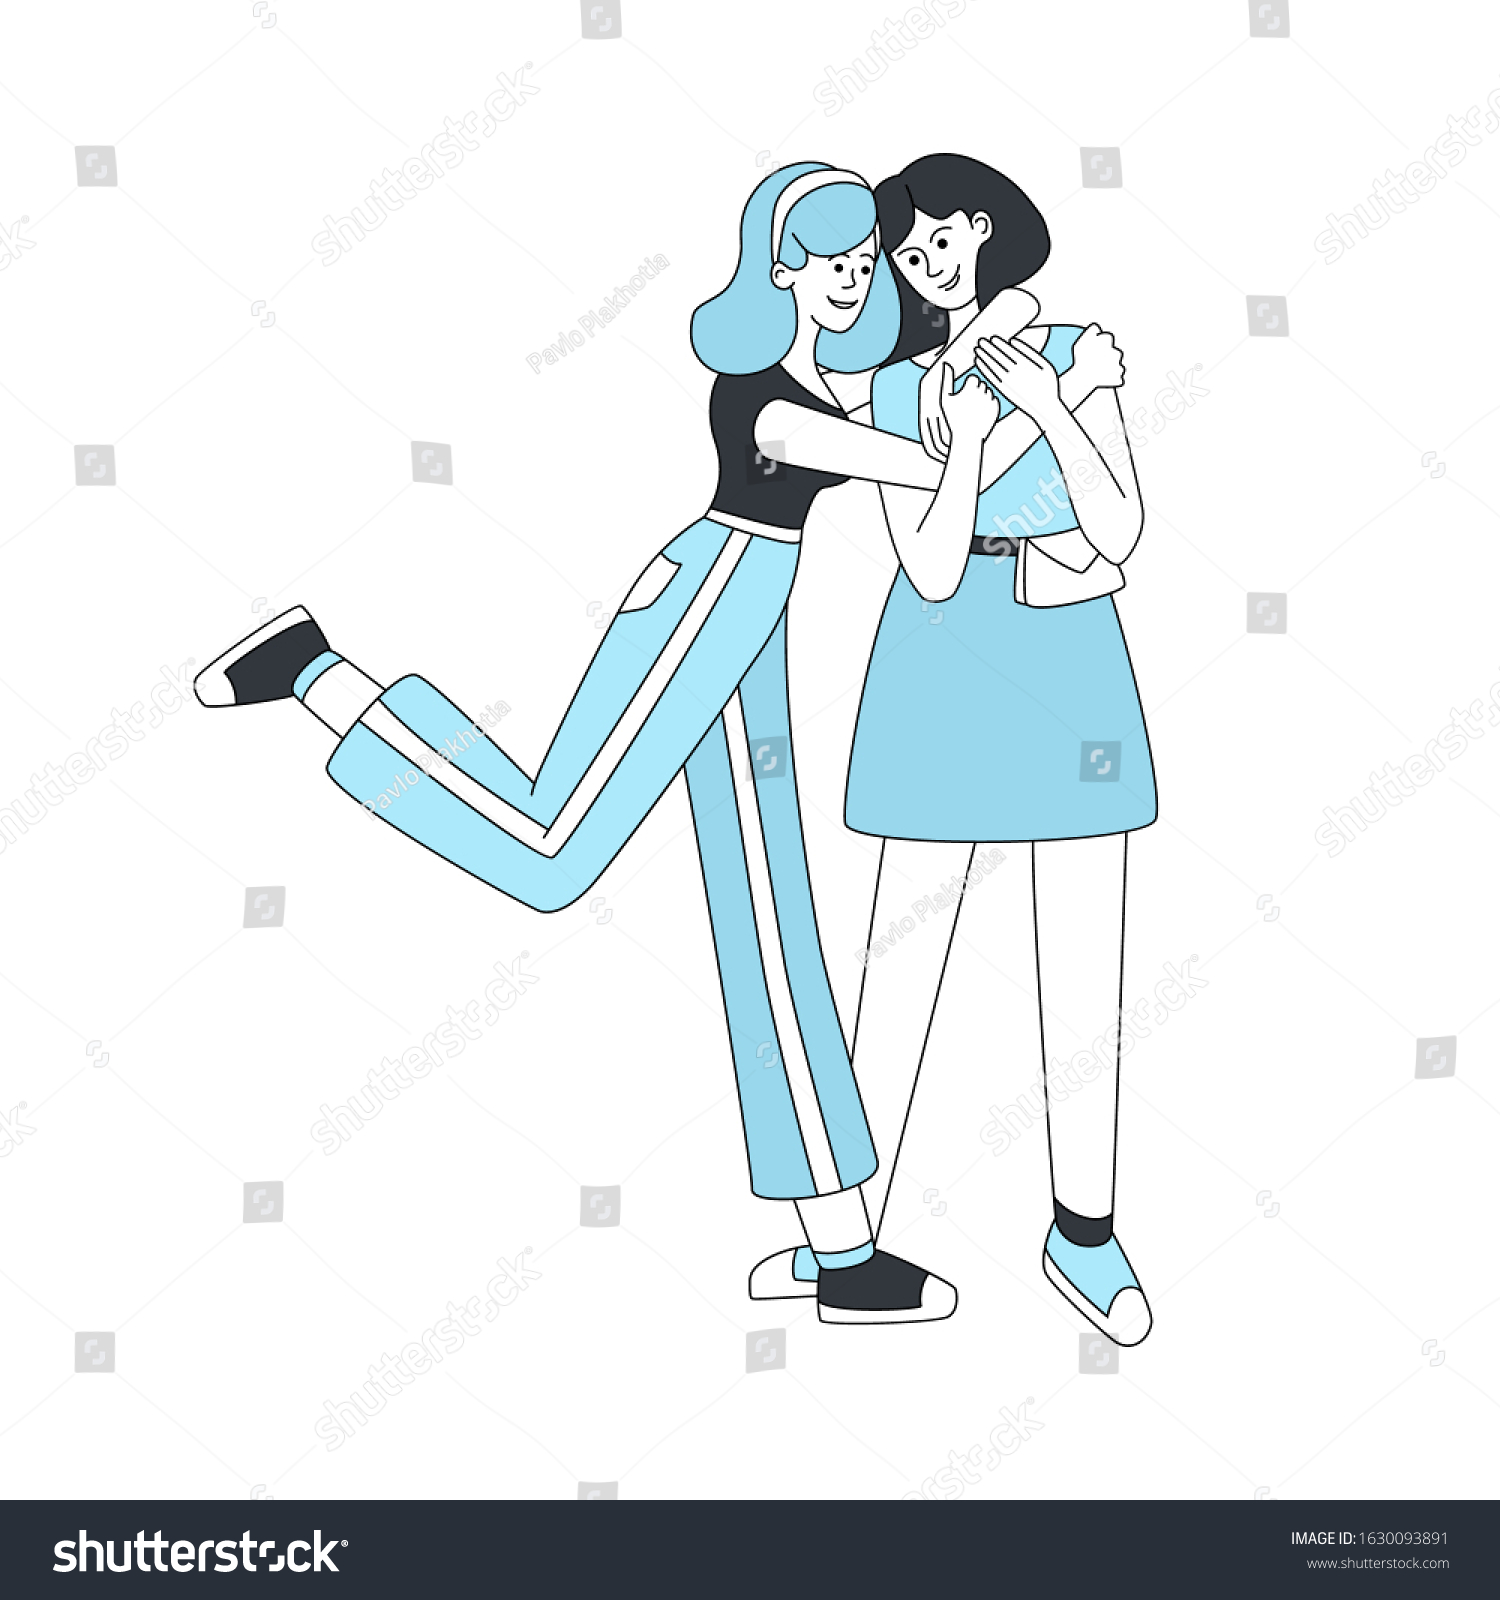 Two Hugging Girls Vector Cartoon Illustration Stock Vector Royalty Free 1630093891 